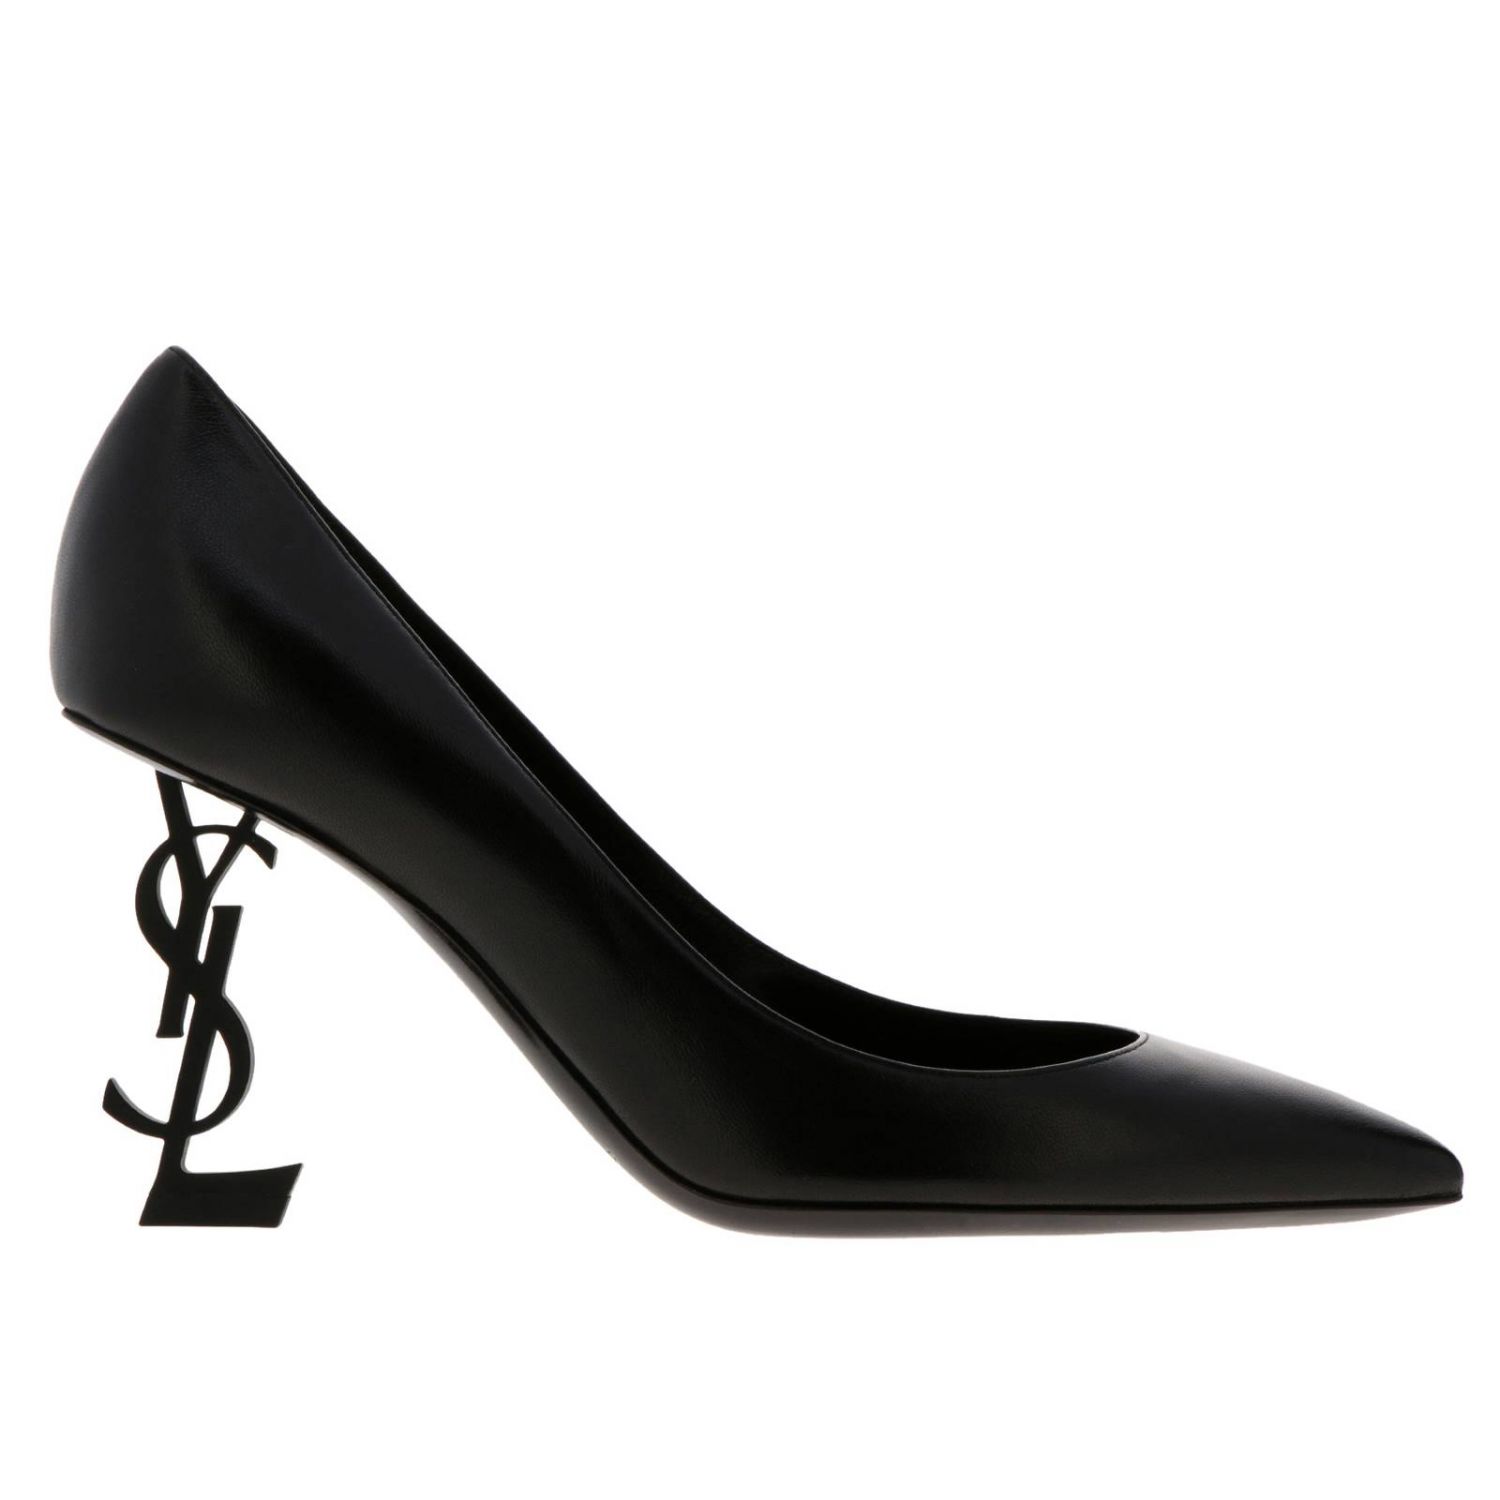 SAINT LAURENT: Heeled sandals women - Black | Heeled Sandals Saint ...